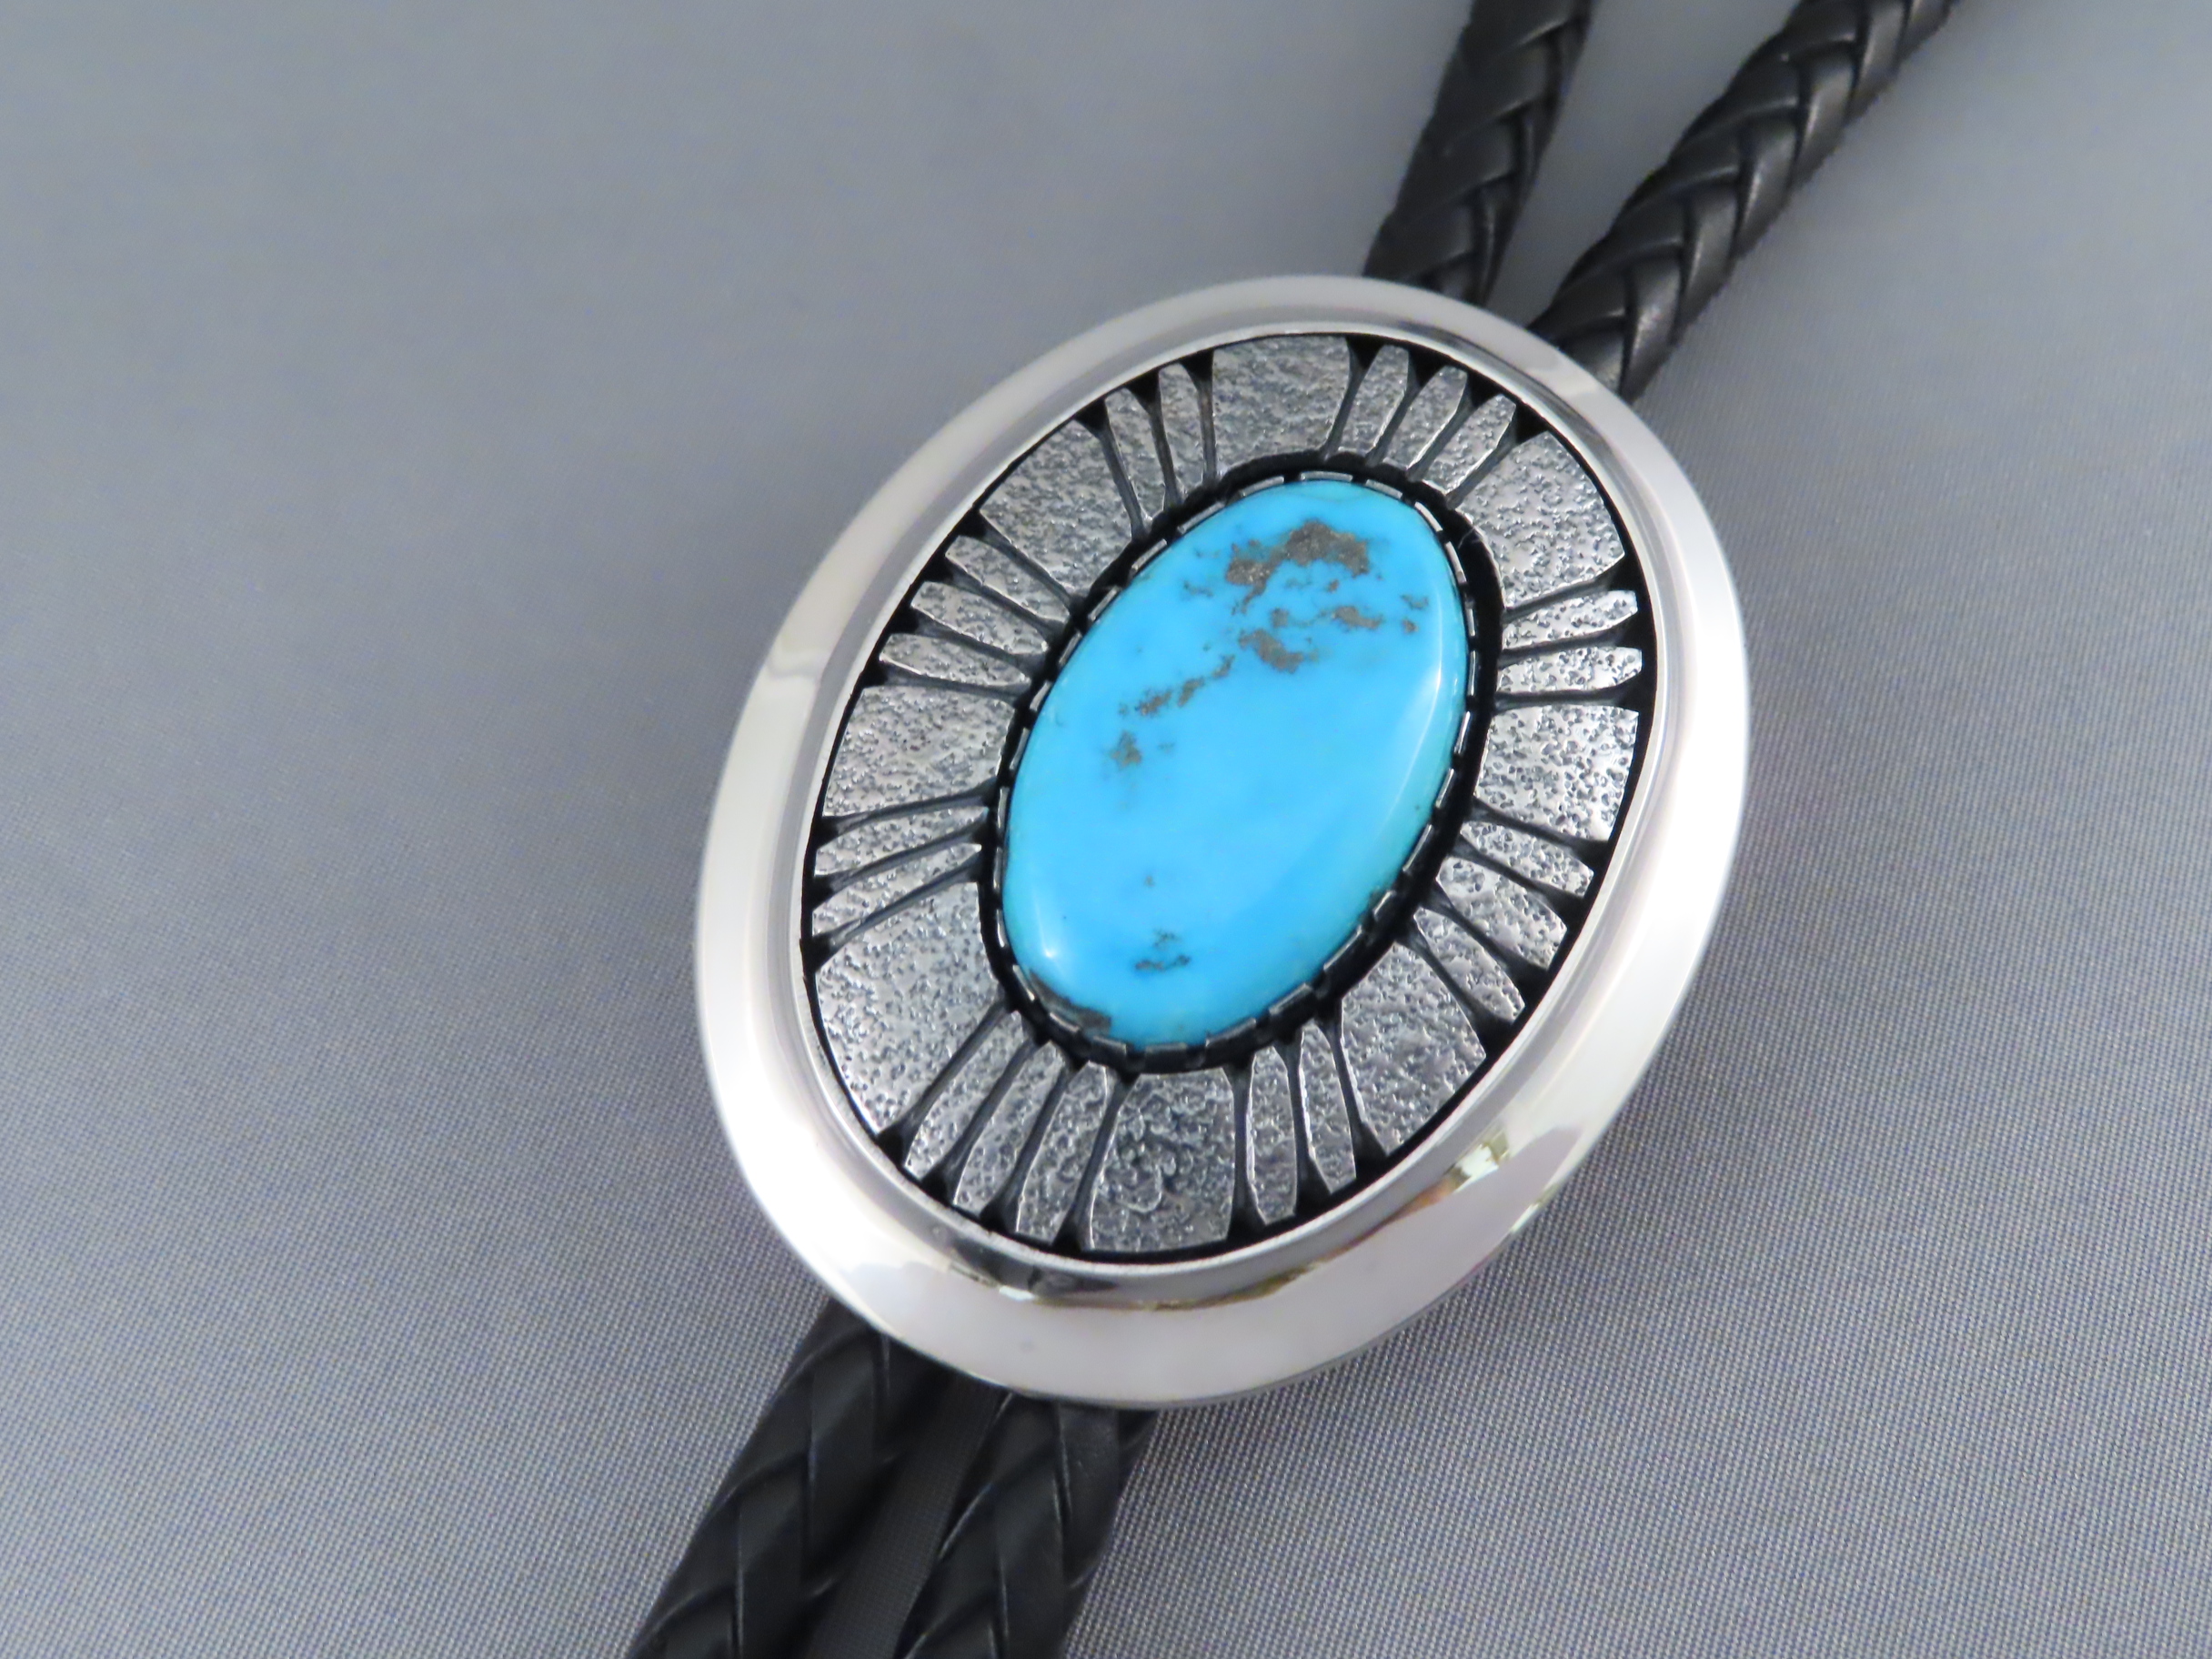 Shop Turquoise Bolo - Battle Mountain Blue Gem Turquoise Bolo Tie by Navajo Indian Jeweler, Al Joe FOR SALE $1,895-